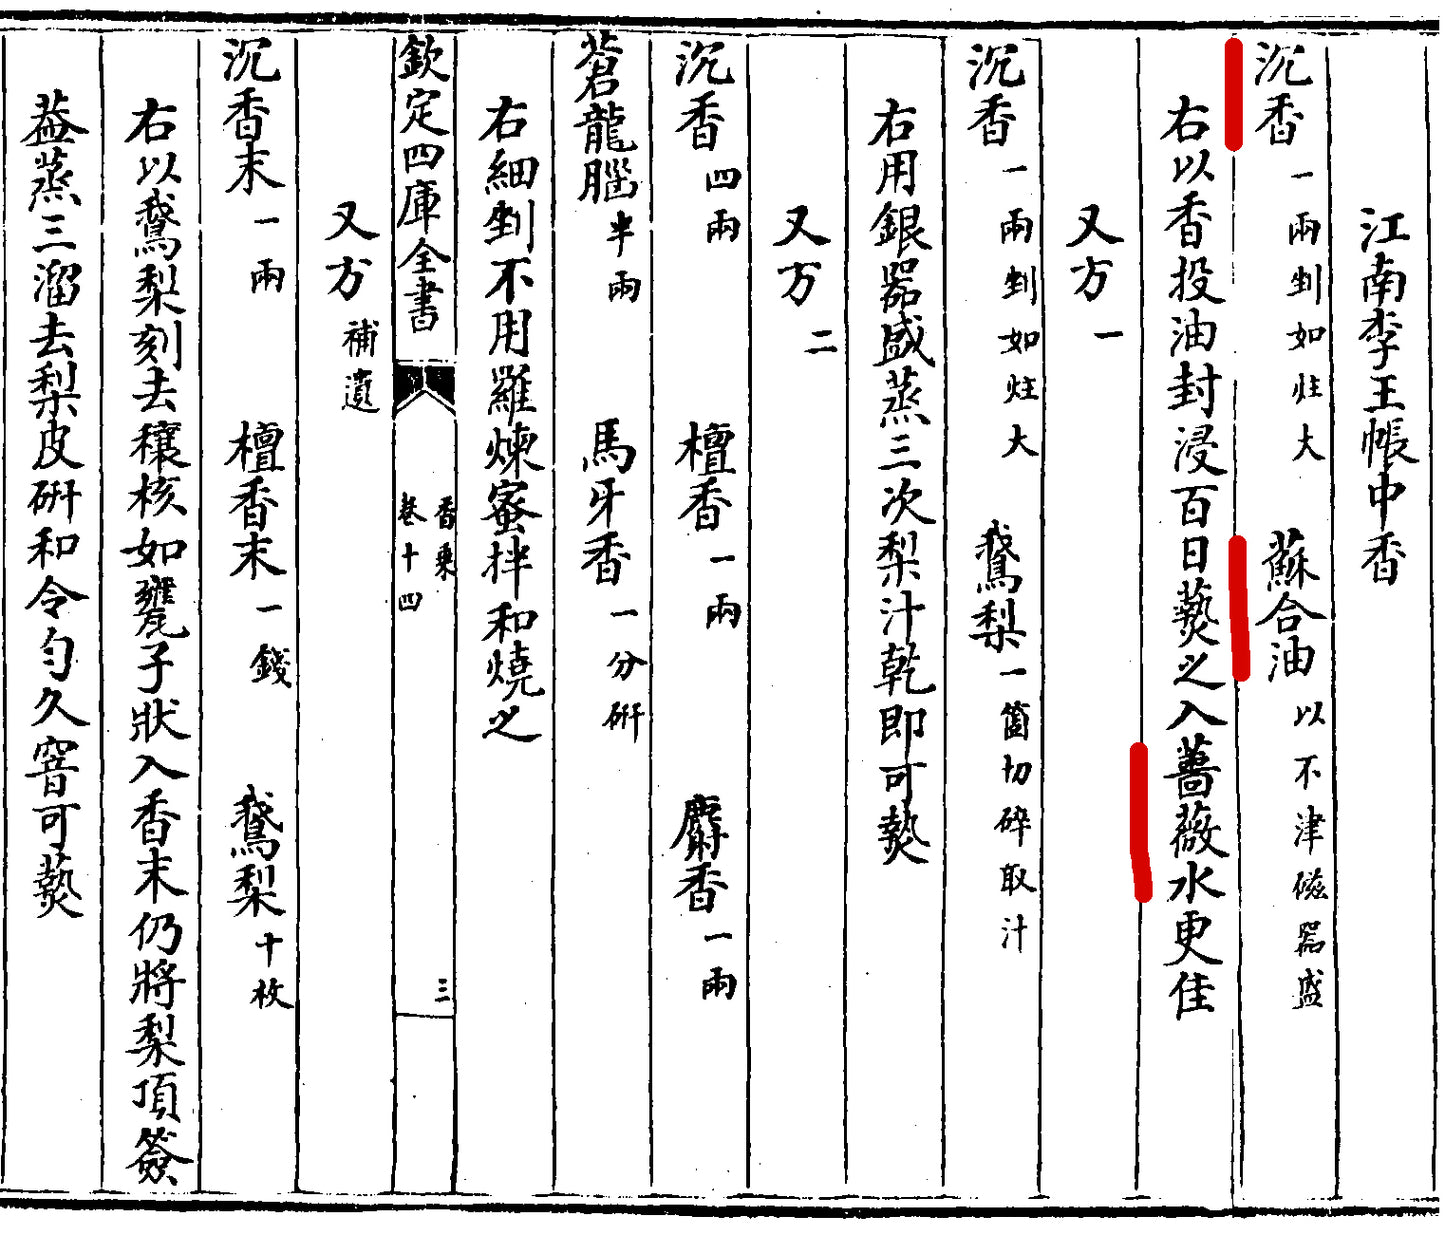 Traditional Blended Incense - Emperor Li's Sleeping Incense (Sinking Version)